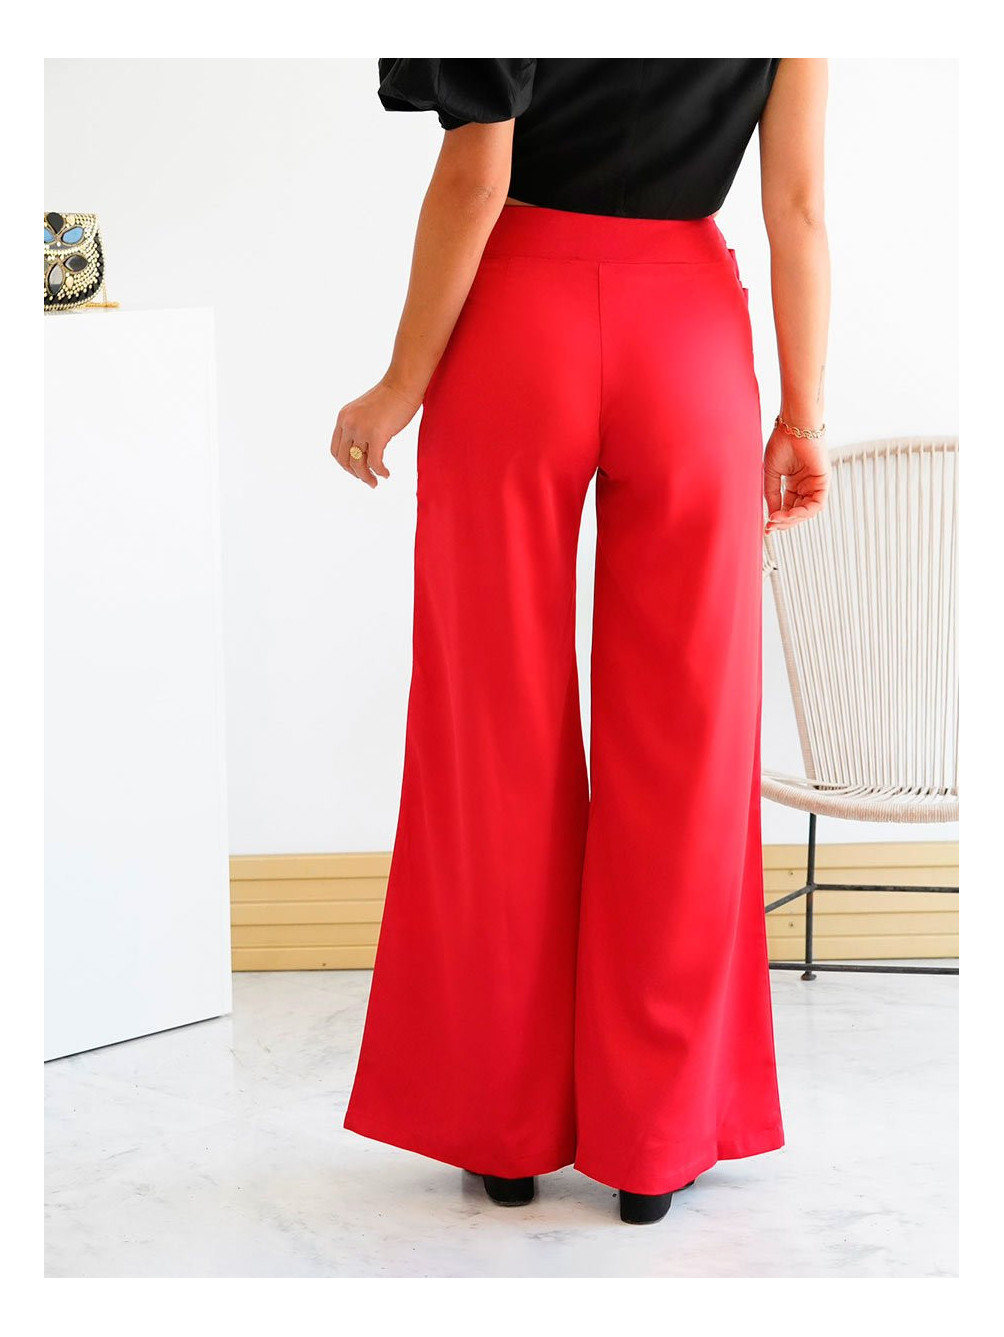 Pantalón Rojo Hebilla, Pantalones de Mujer, Pantalón Rojo, Mariquita Trasquilá